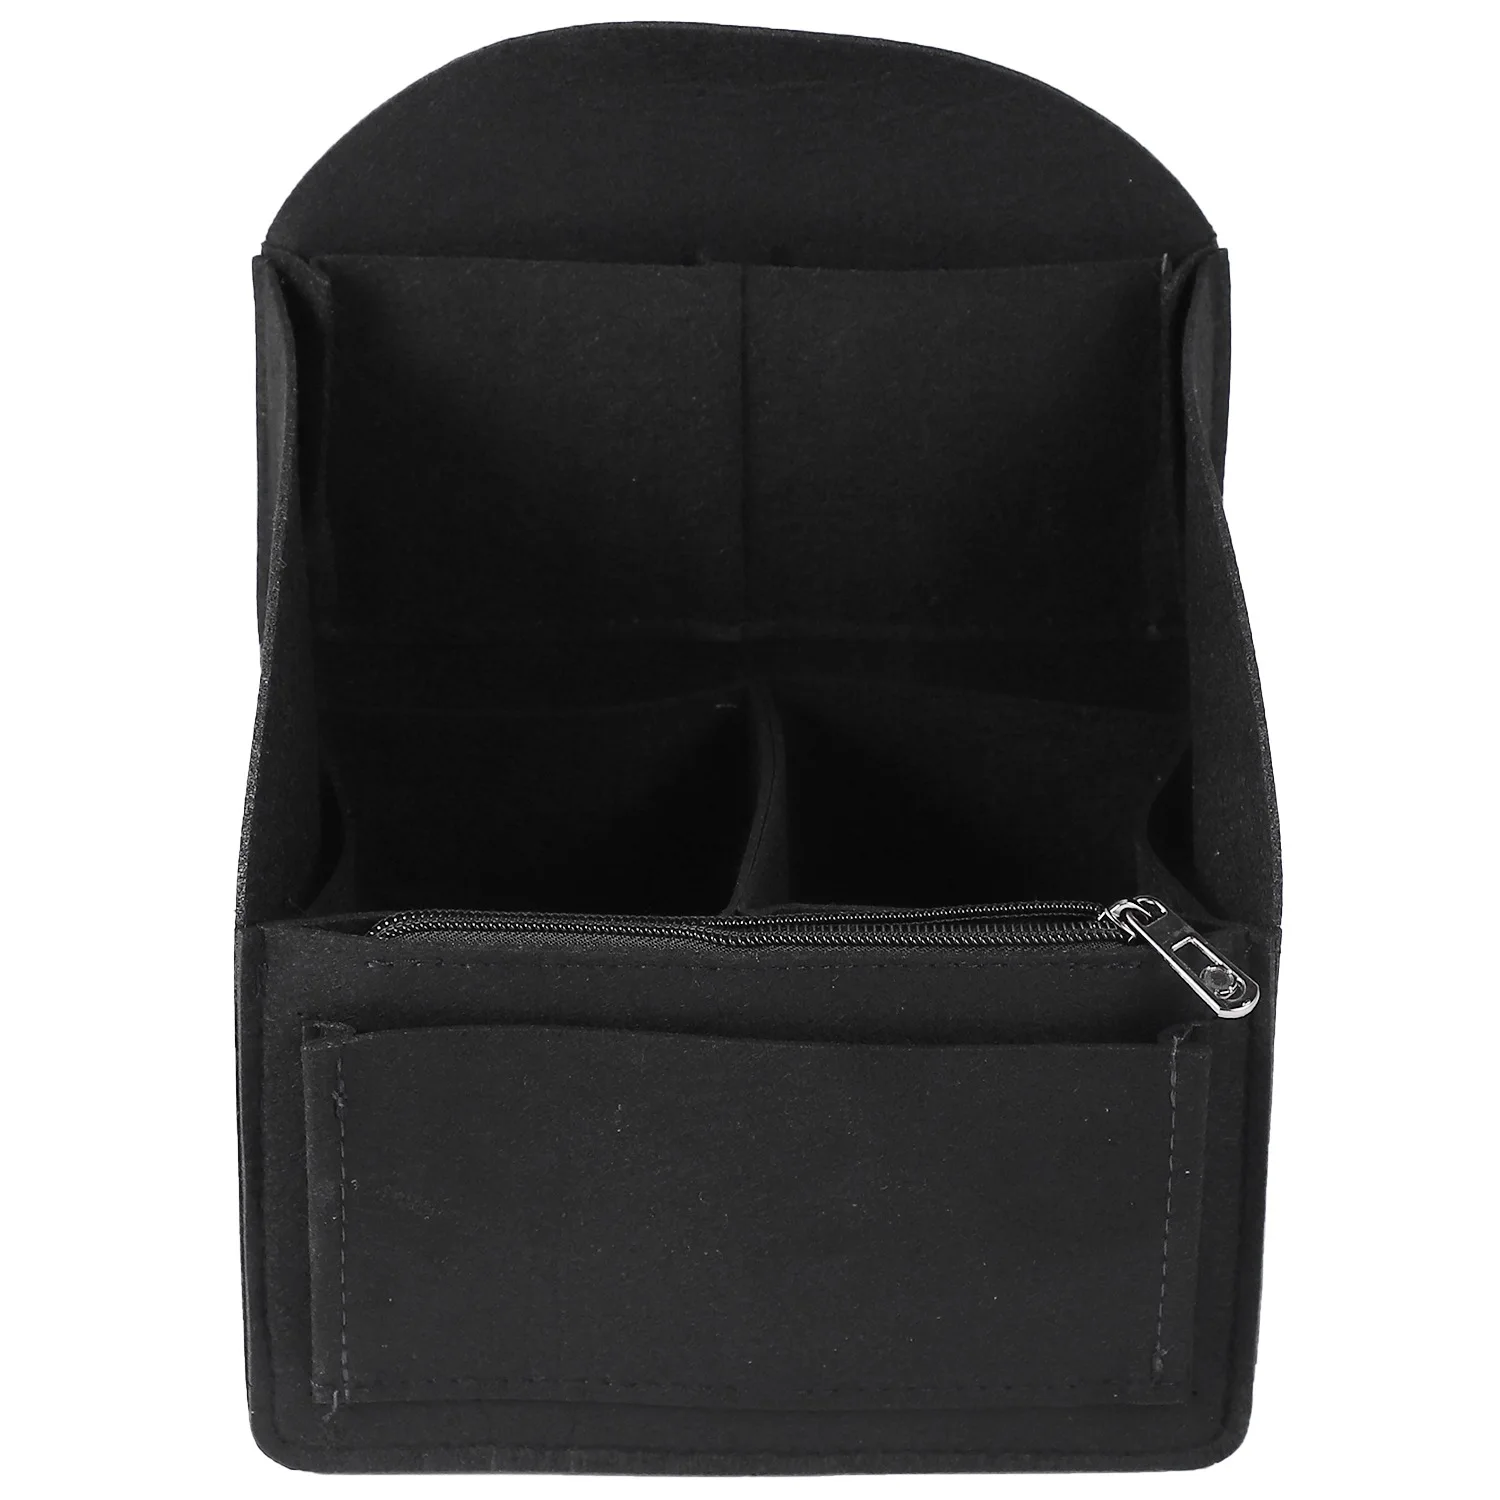 

Felt Backpack Insert Organizer Storage Bag Universal Bag In Bag Men Women Shoulder Tote Bags Handbag Organizers(Black)